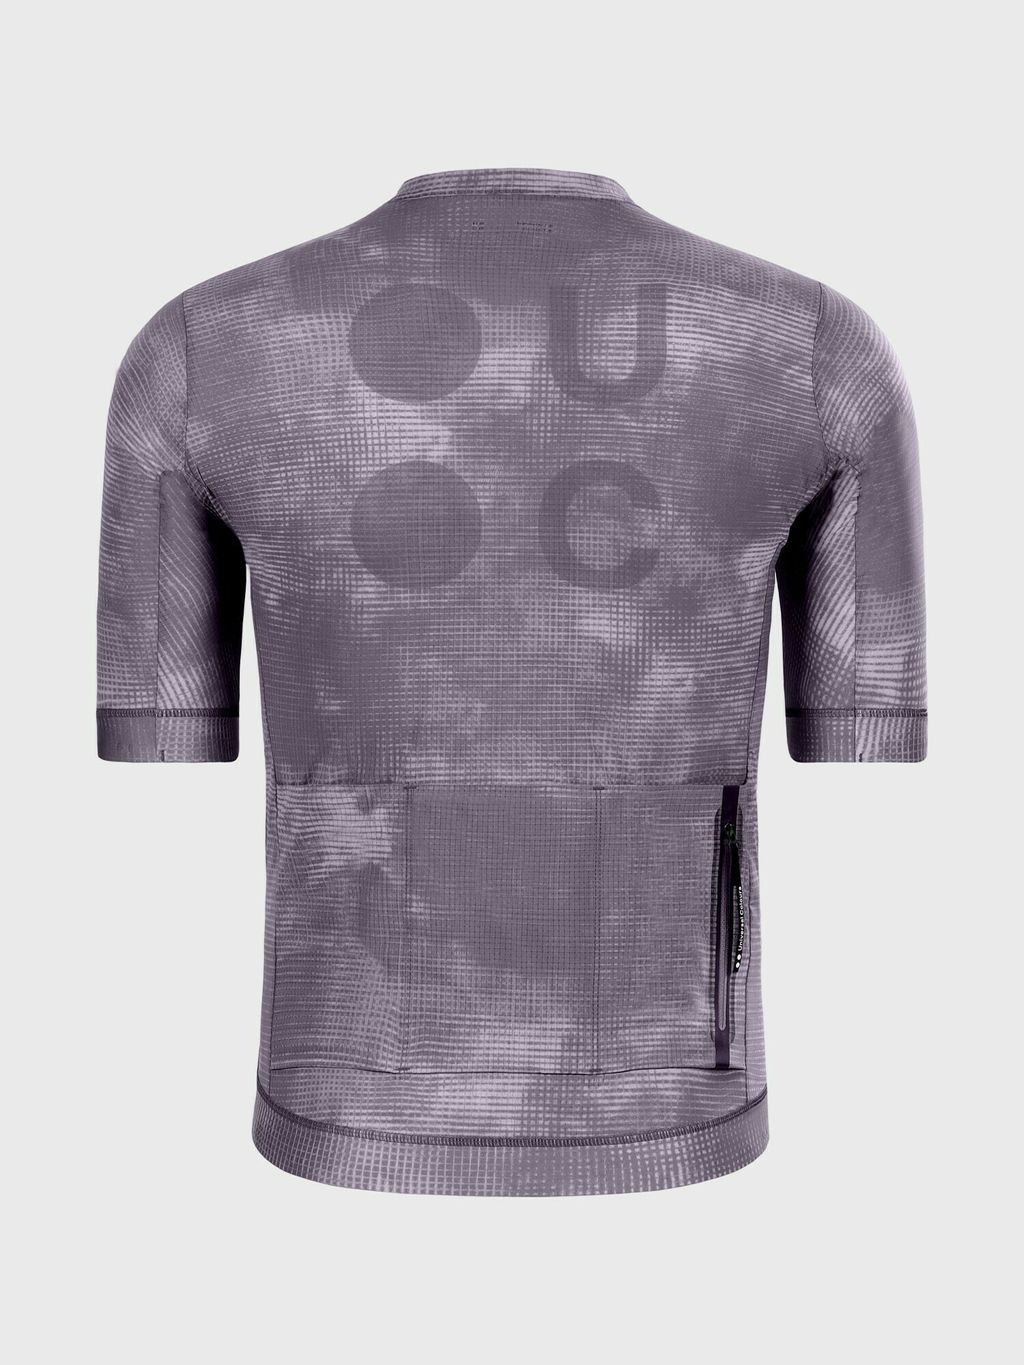 Universal-Colours-Chroma-Grid-Short-Sleeve-Jersey-Thistle-Purpleback.jpeg